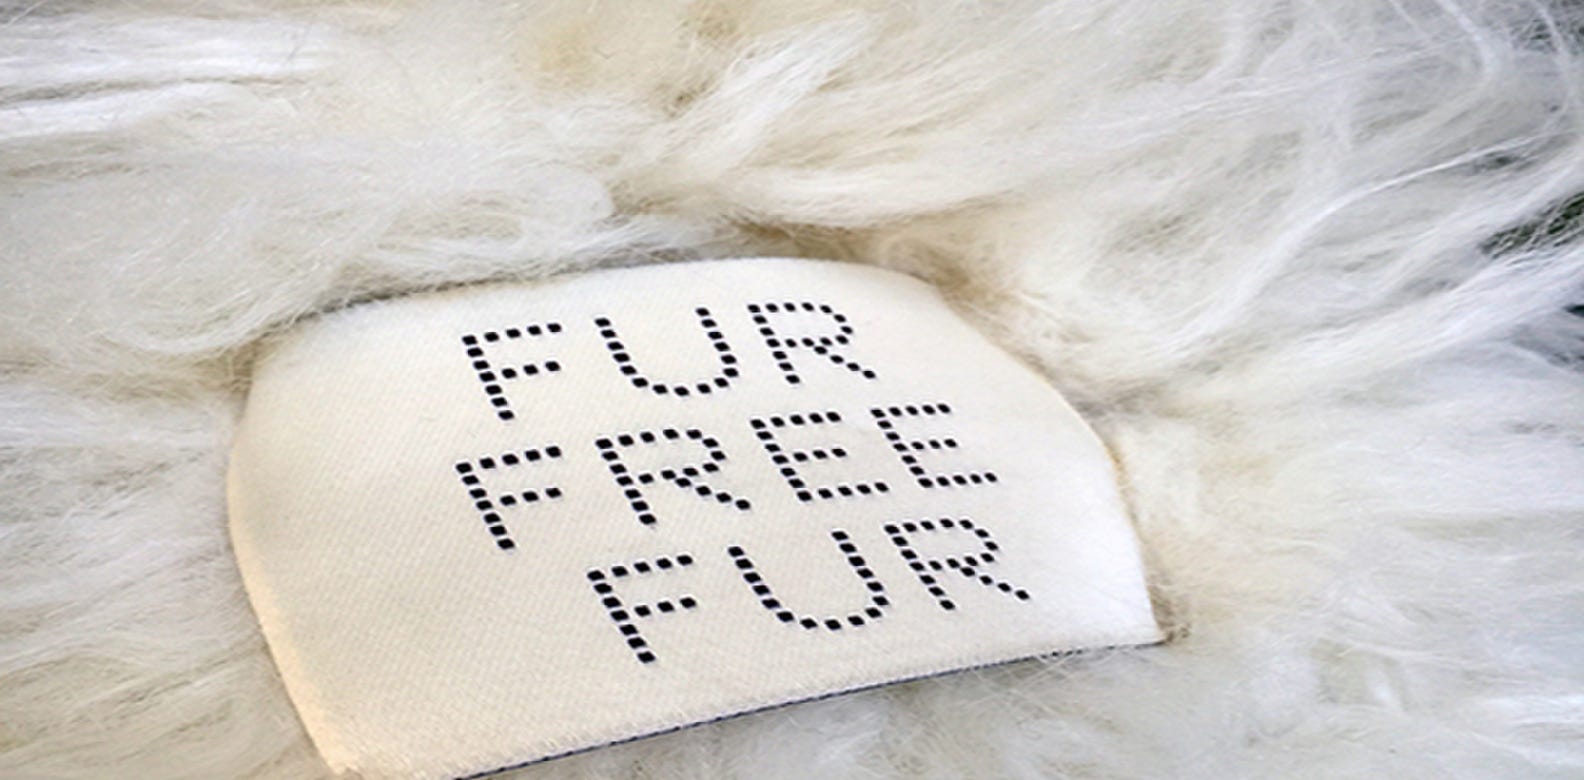 Stella McCartney Celebrates 20 Years of Being Fur-Free - PAPER Magazine